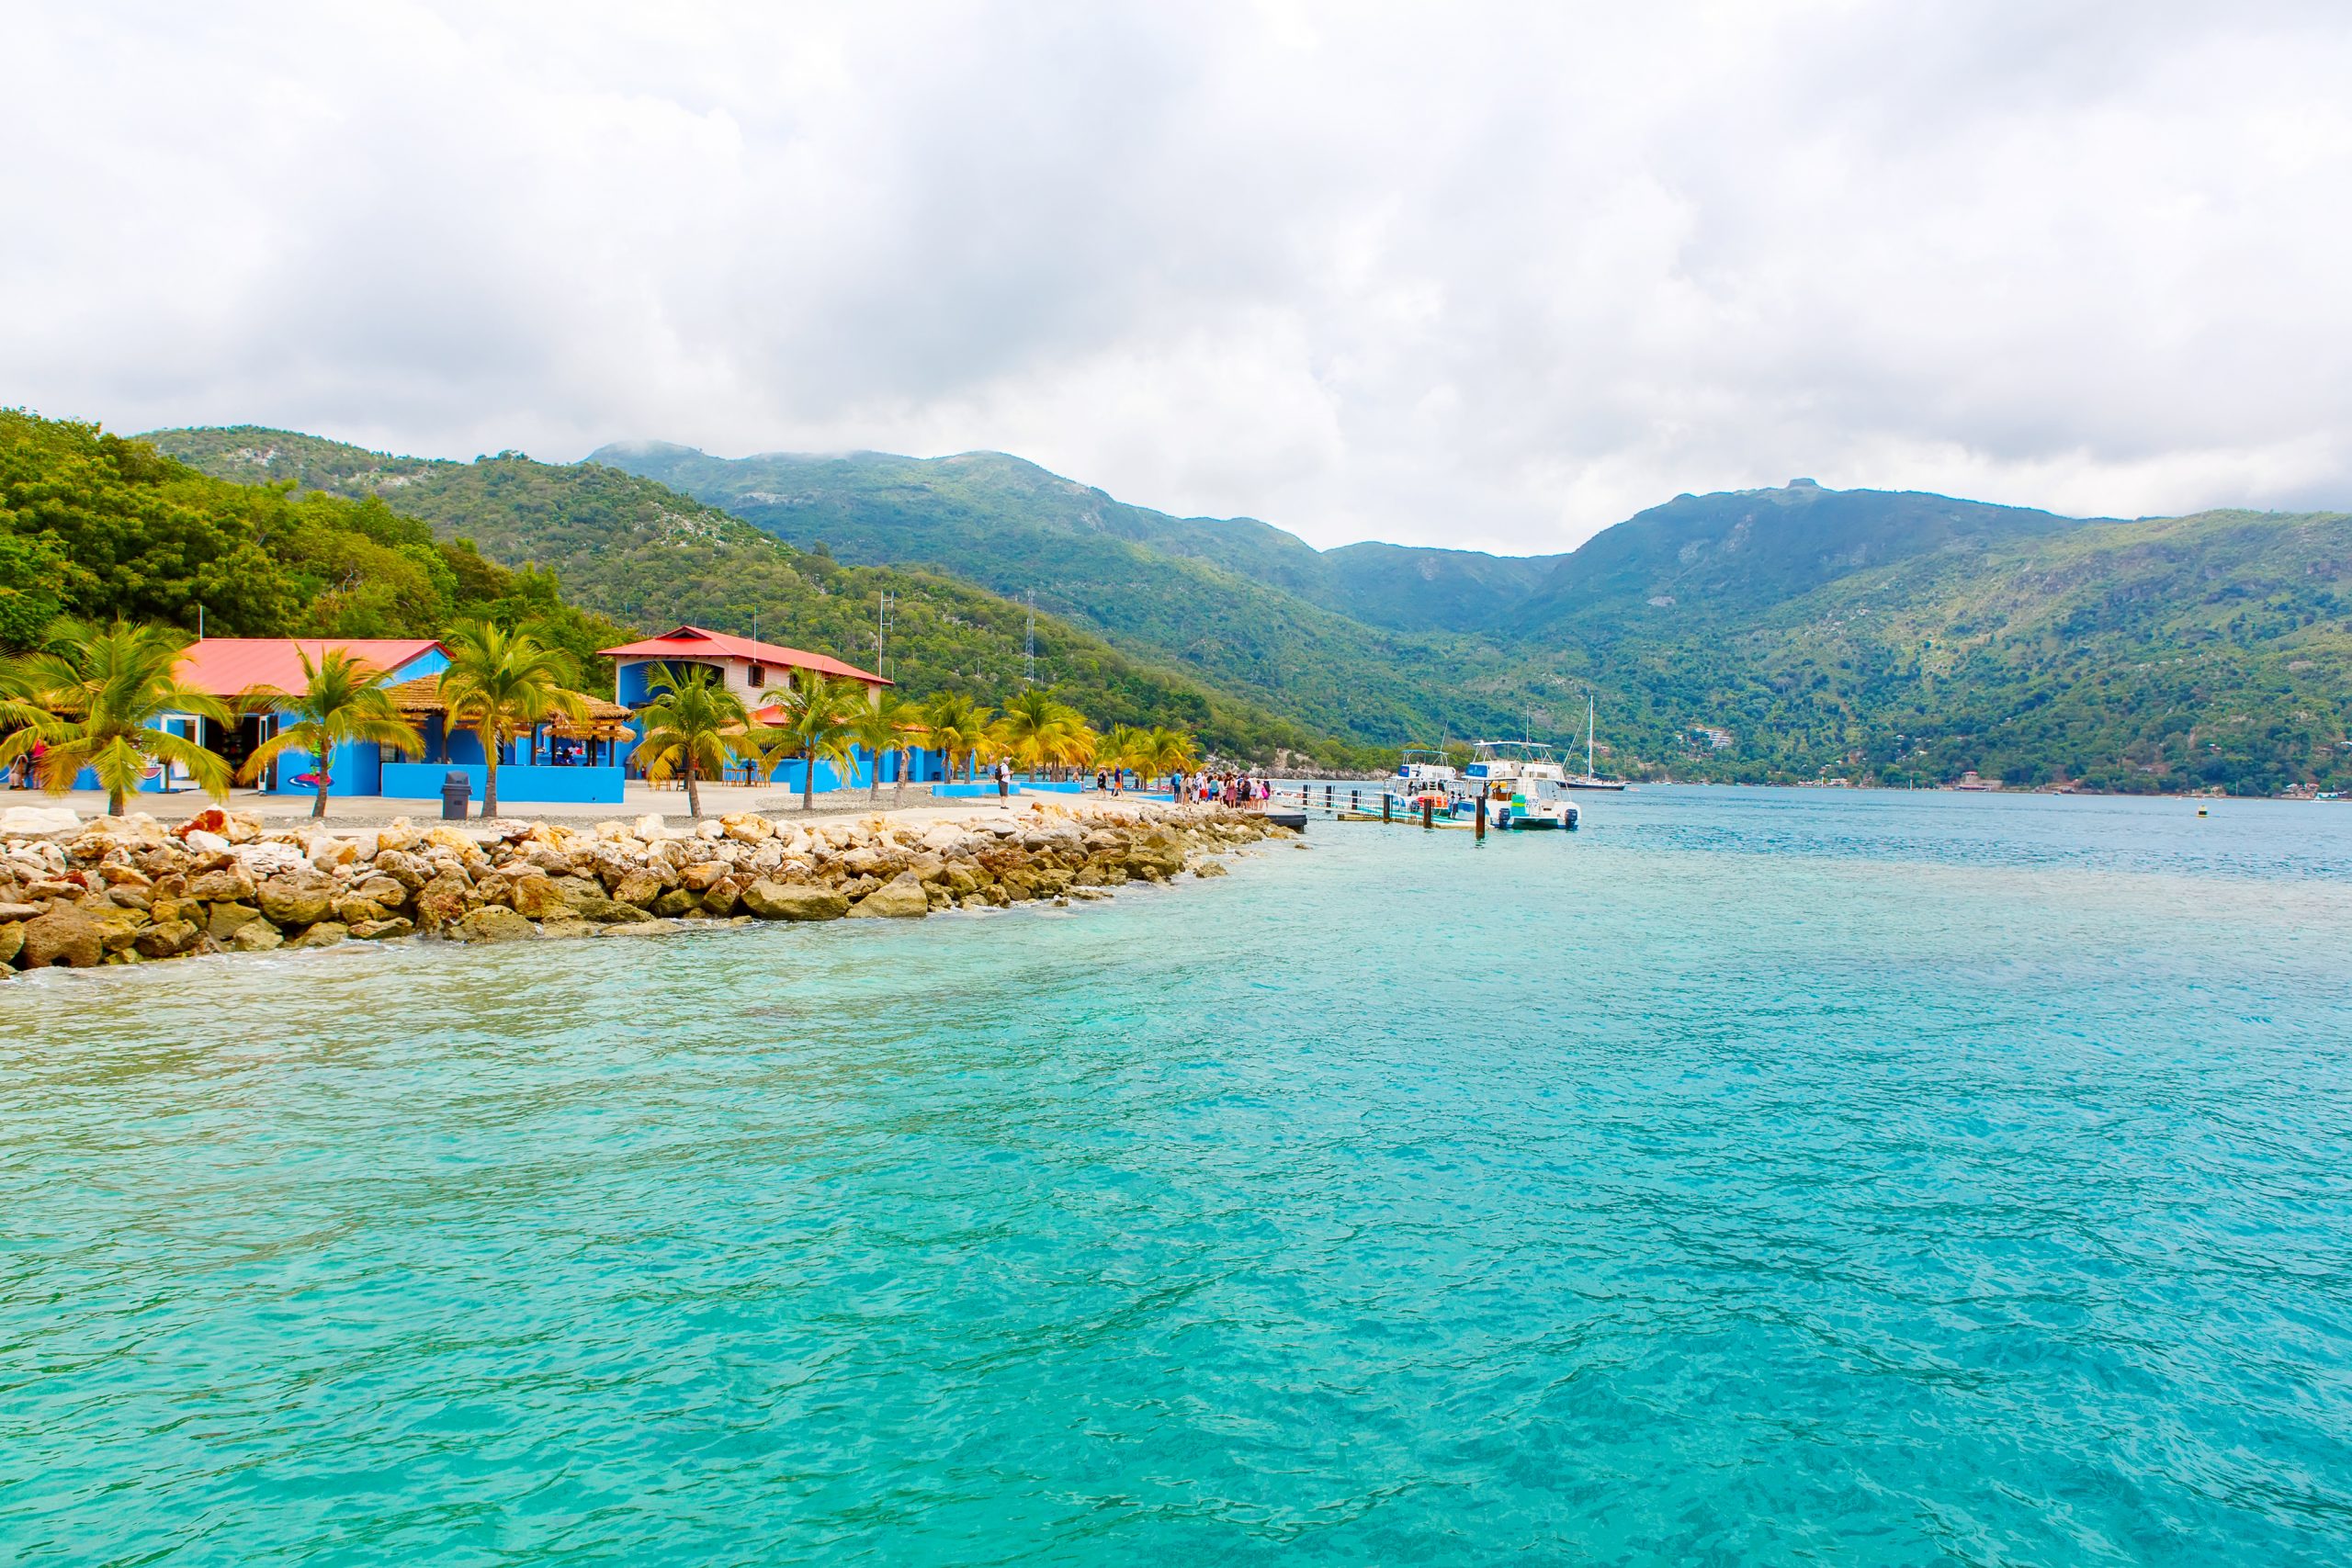 Cruise Destinations - Experience the Caribbean Port of Labadee, Haiti on a Royal Caribbean Cruise